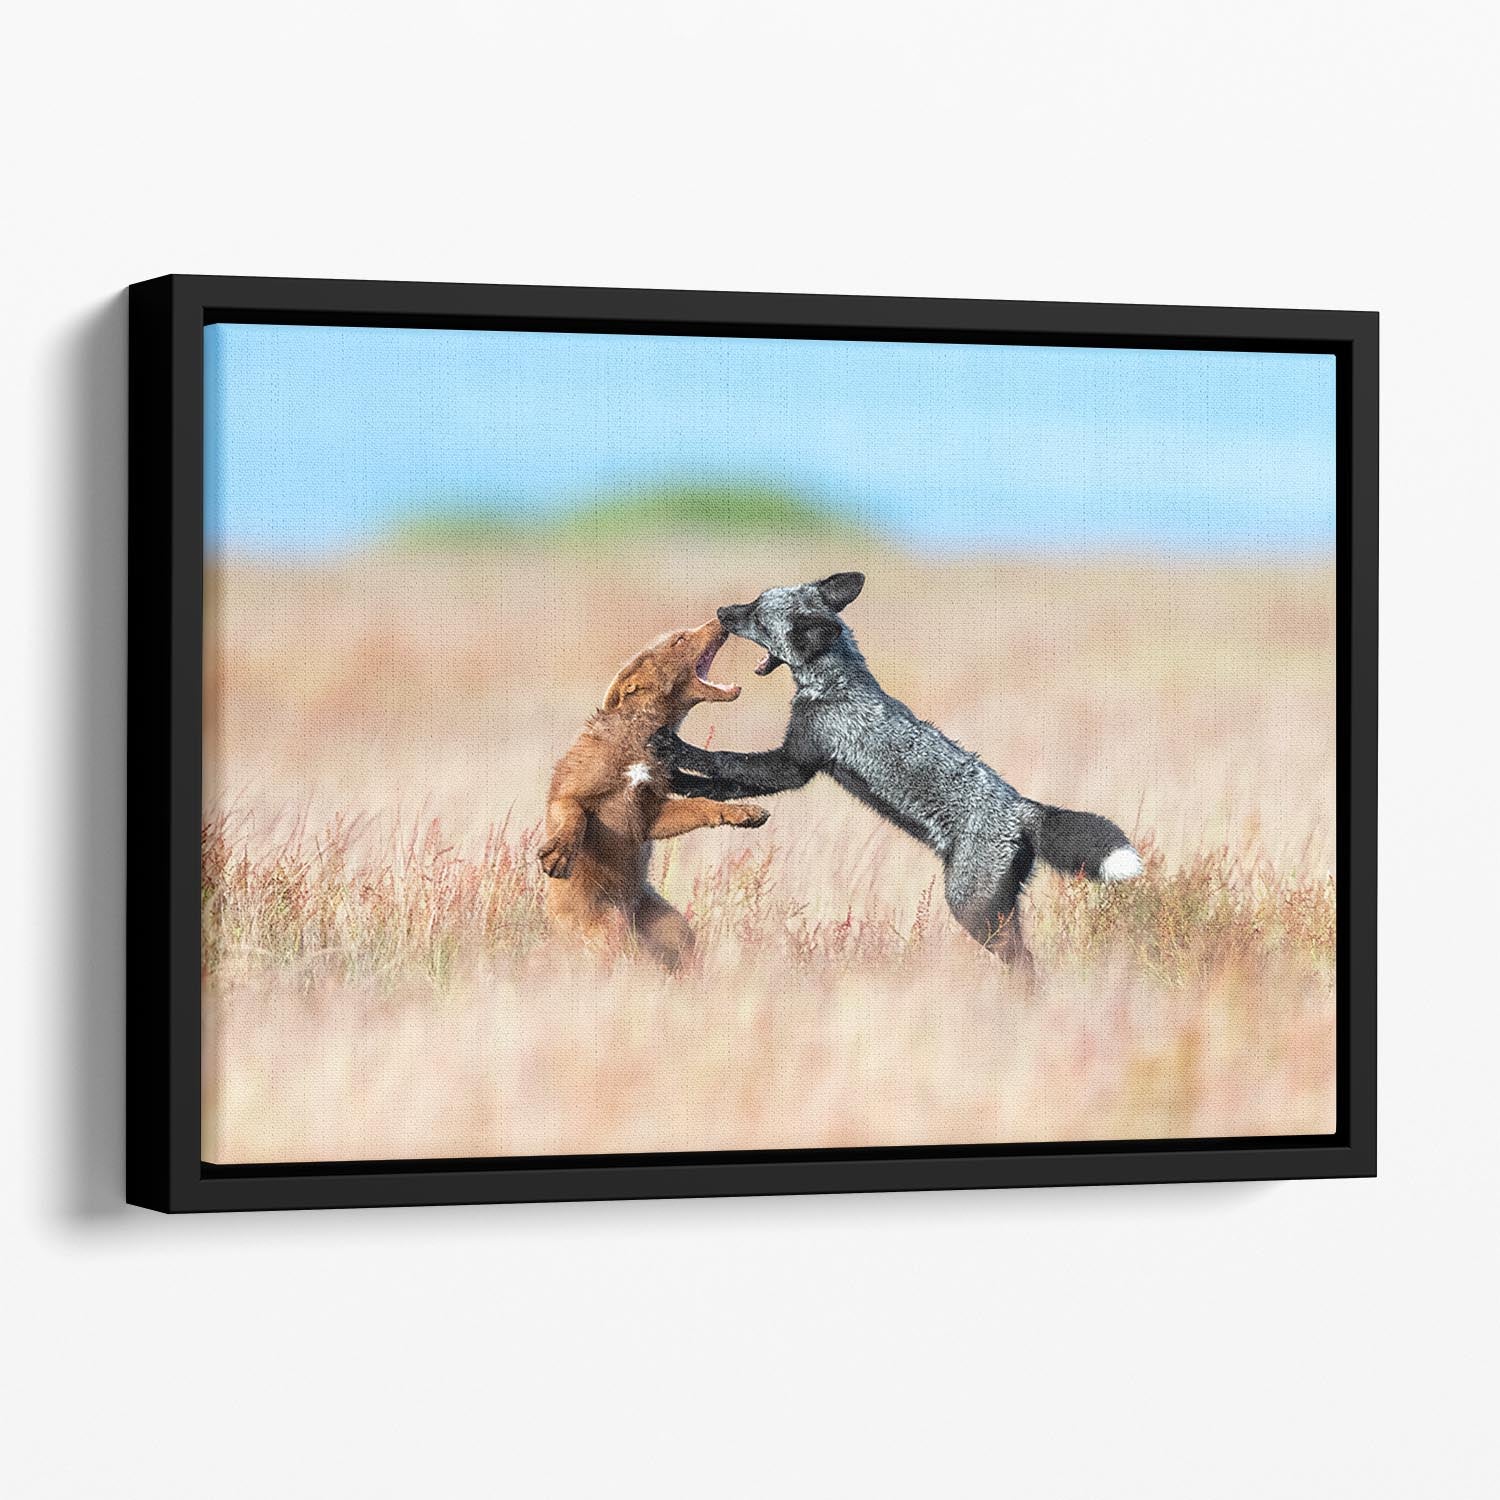 Two Foxes Wrestling Floating Framed Canvas - Canvas Art Rocks - 1